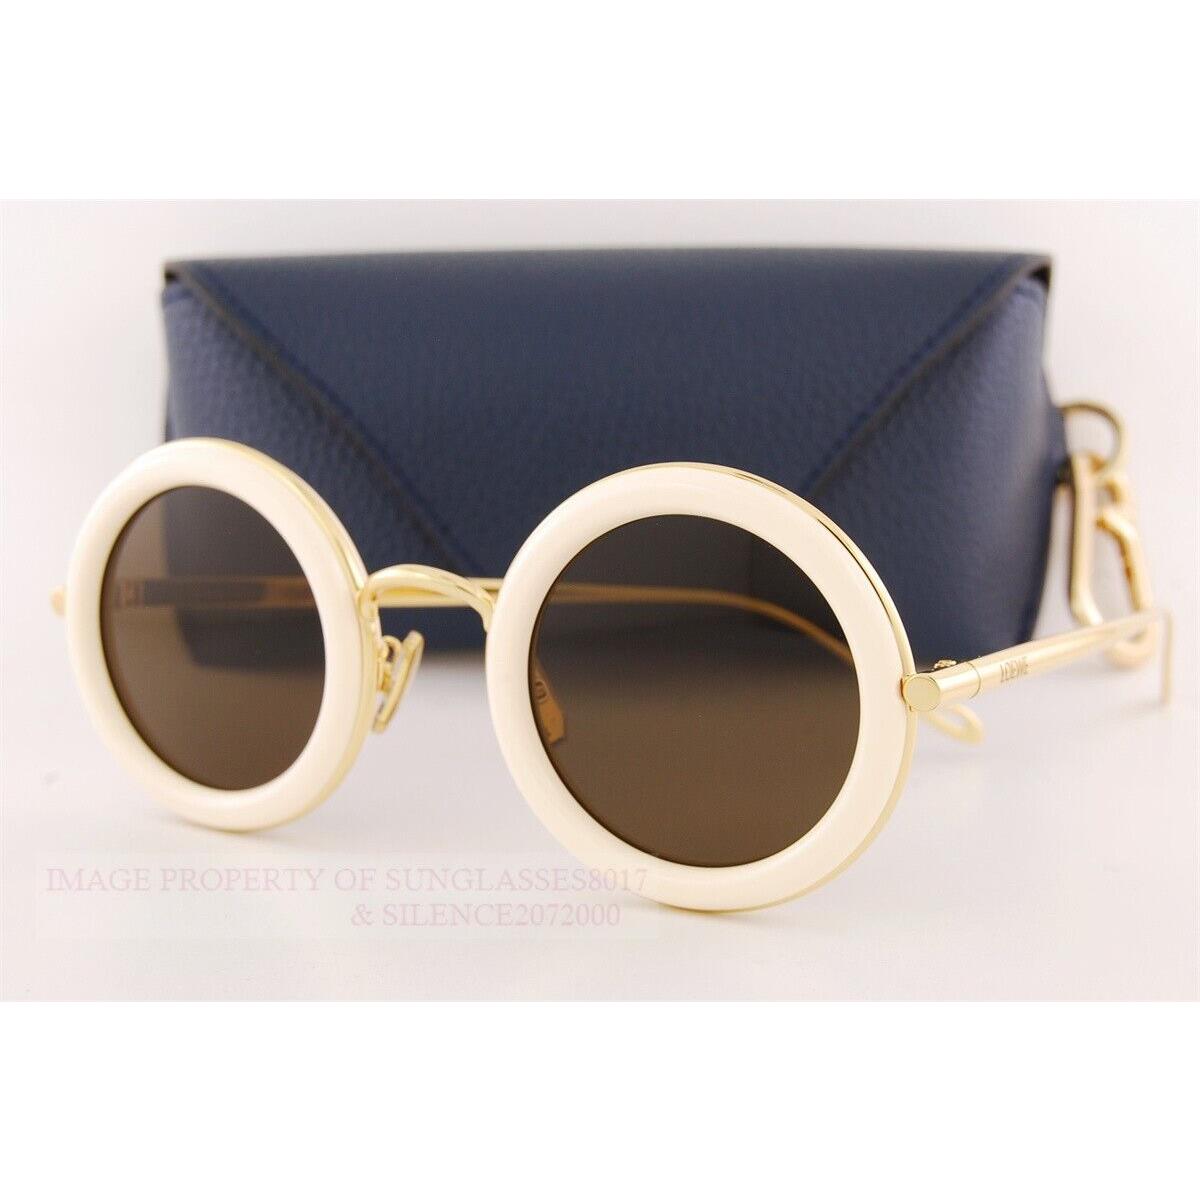 Loewe sunglasses  - White/Gold Frame, Brown Lens